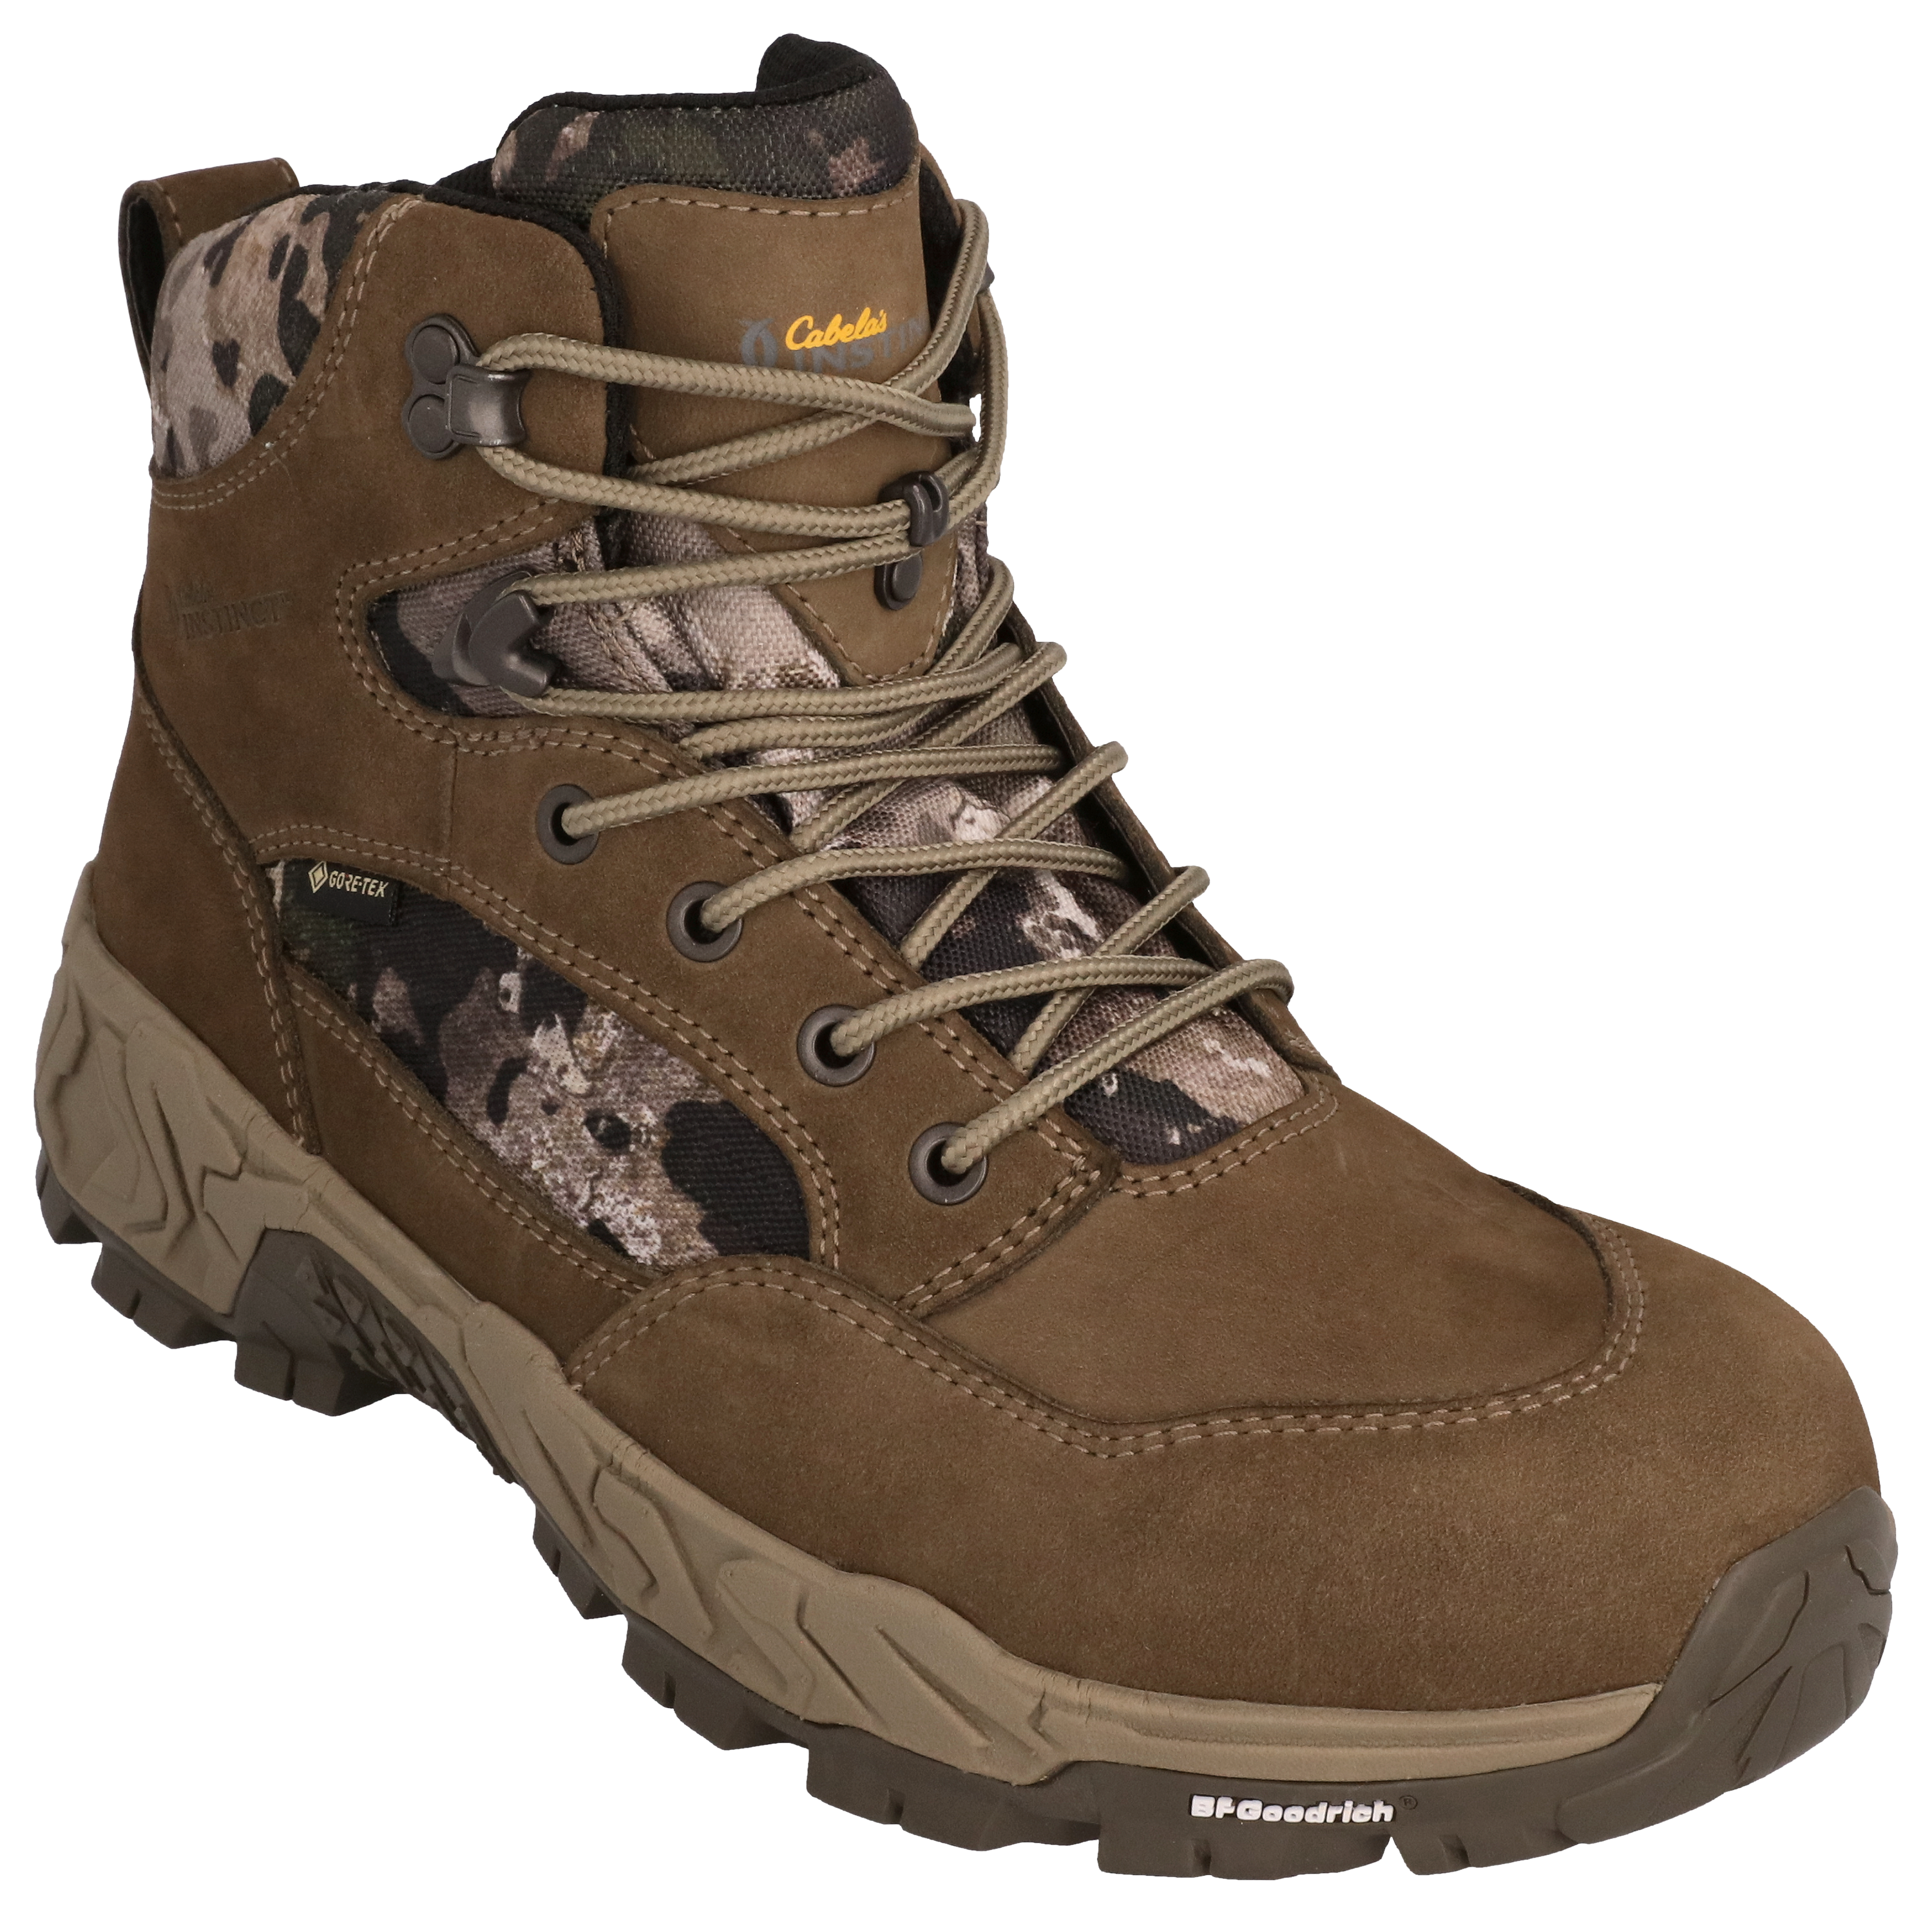 Cabela's Instinct Credence GORE-TEX Hunting Boots for Men - Olive/TrueTimber VSX - 8.5M